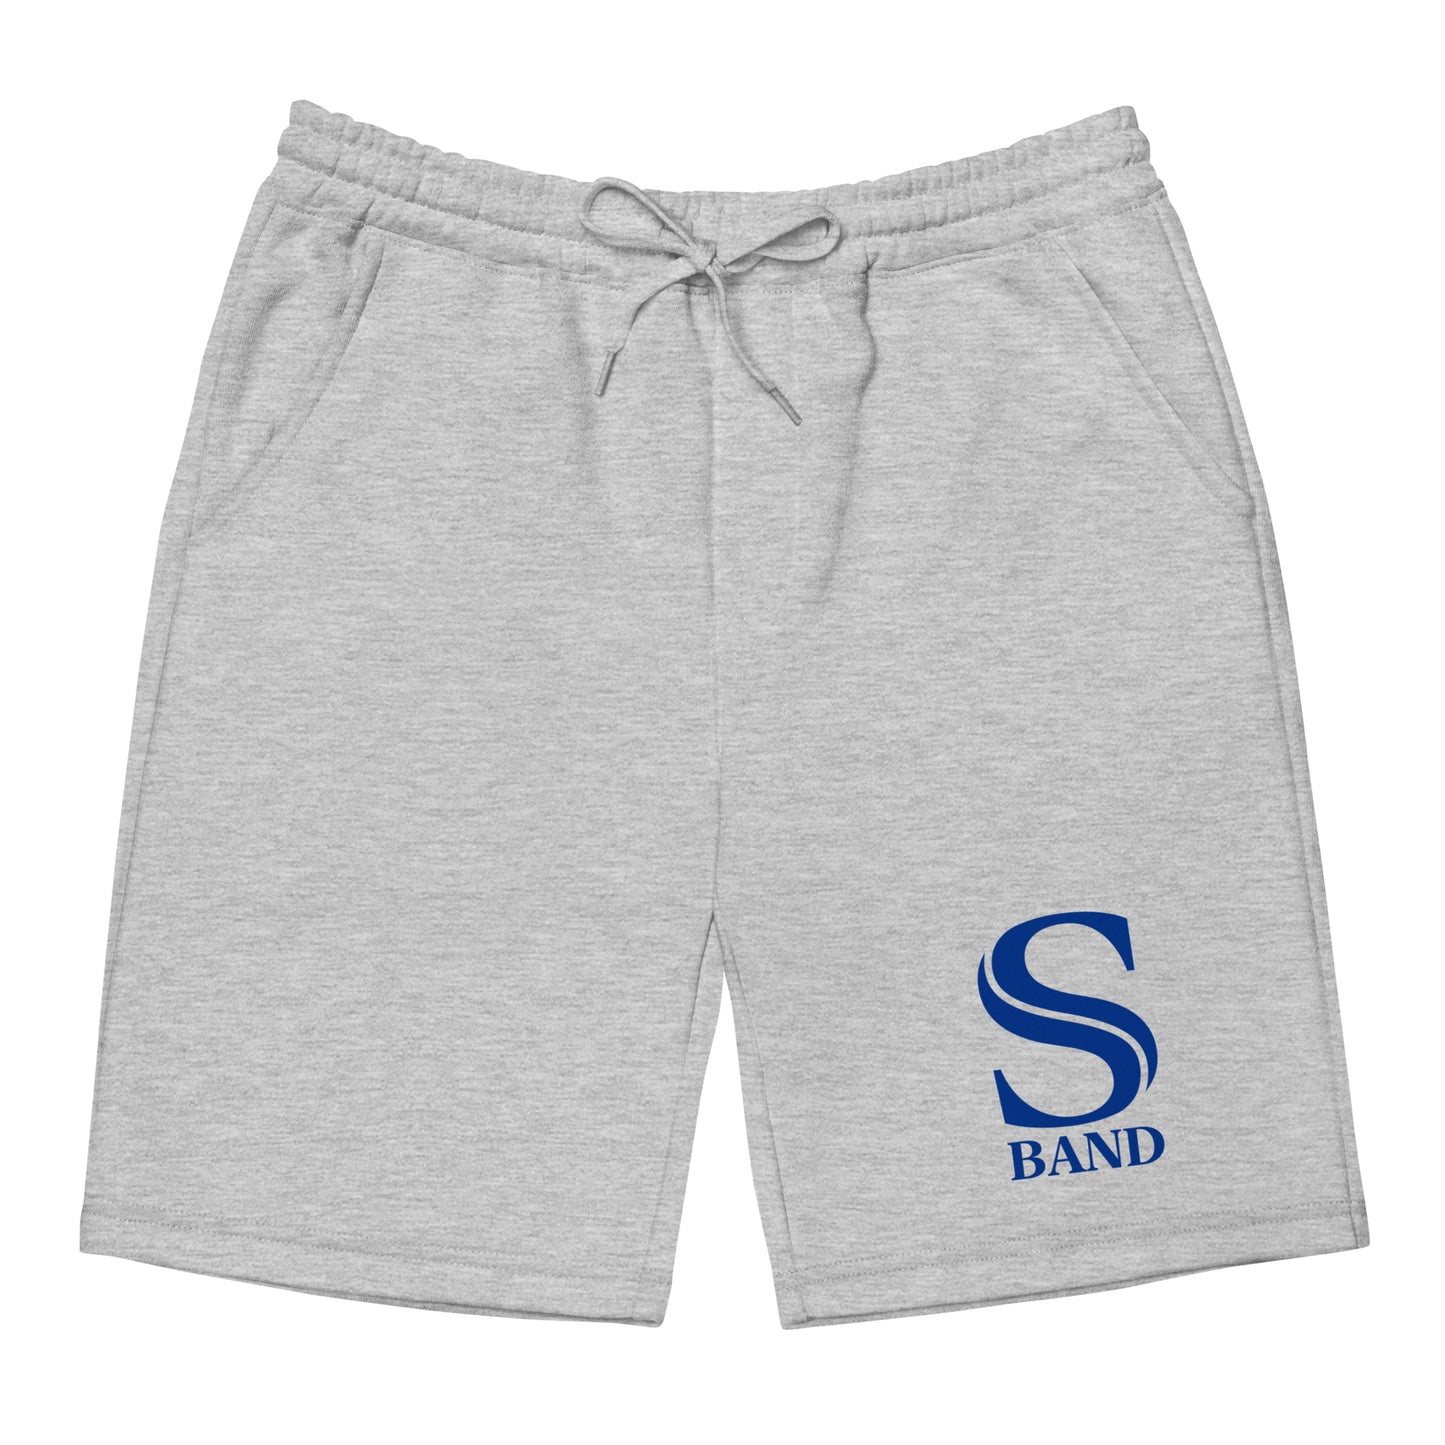 SS Band Fleece Shorts